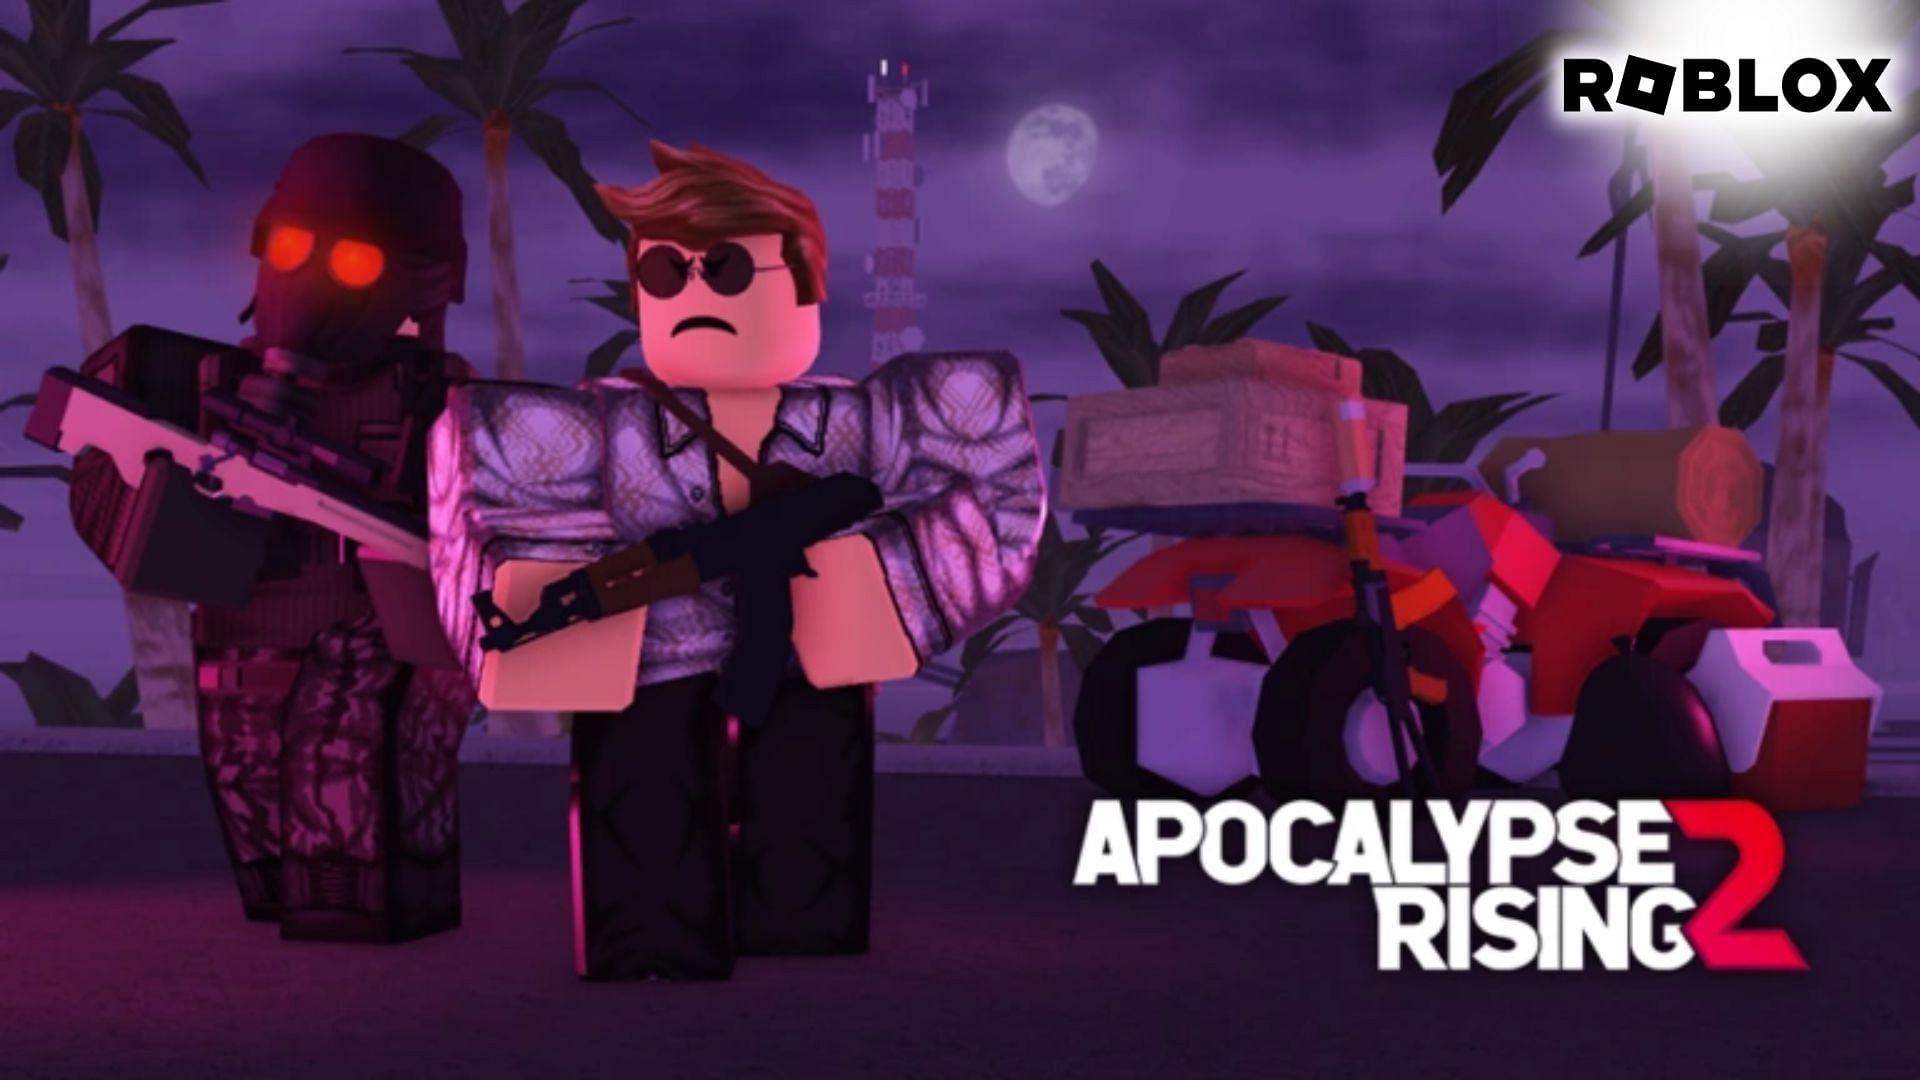 Apocalypse is rising again, will you run or fight? (Image via Sportskeeda)